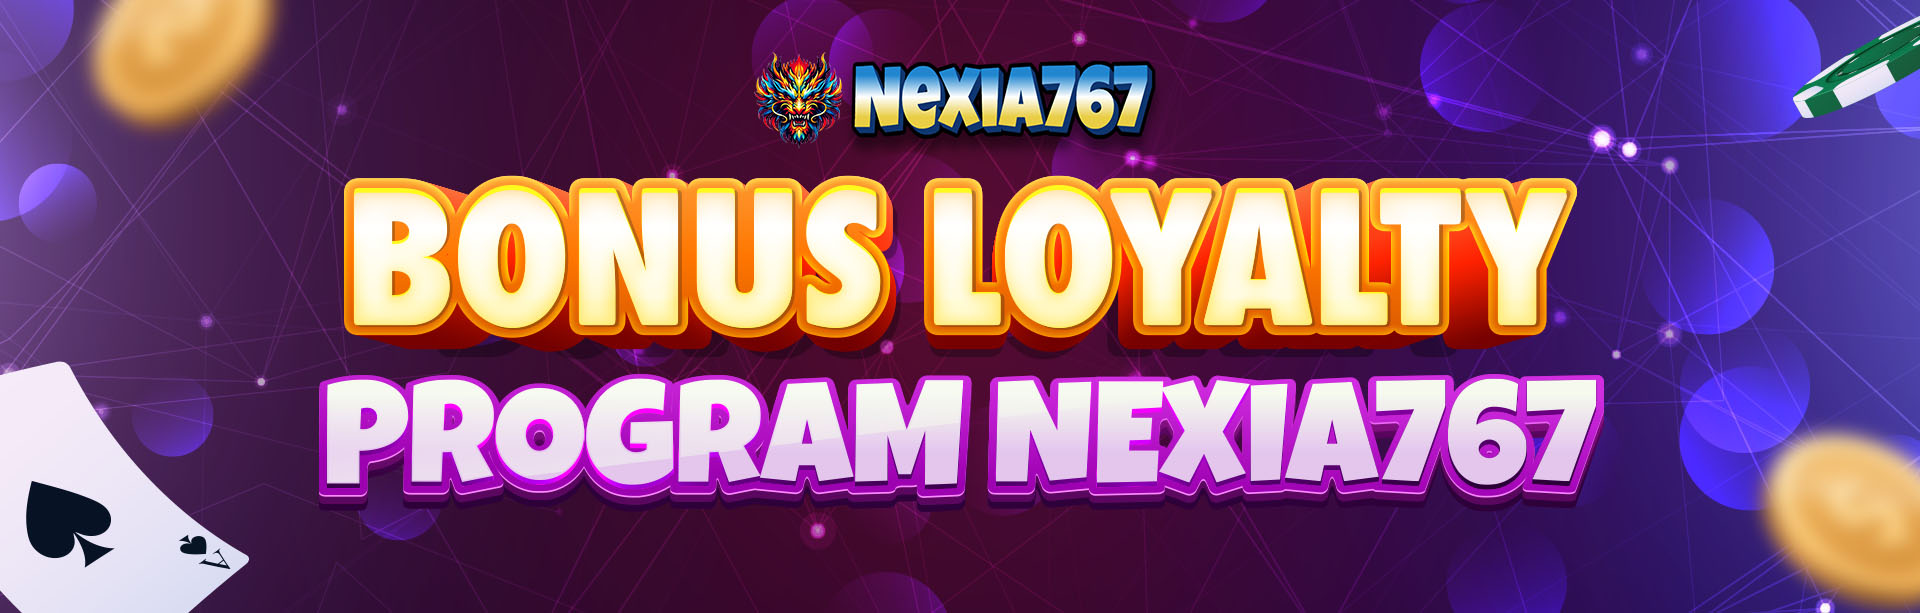 Program Loyalty Nexia767